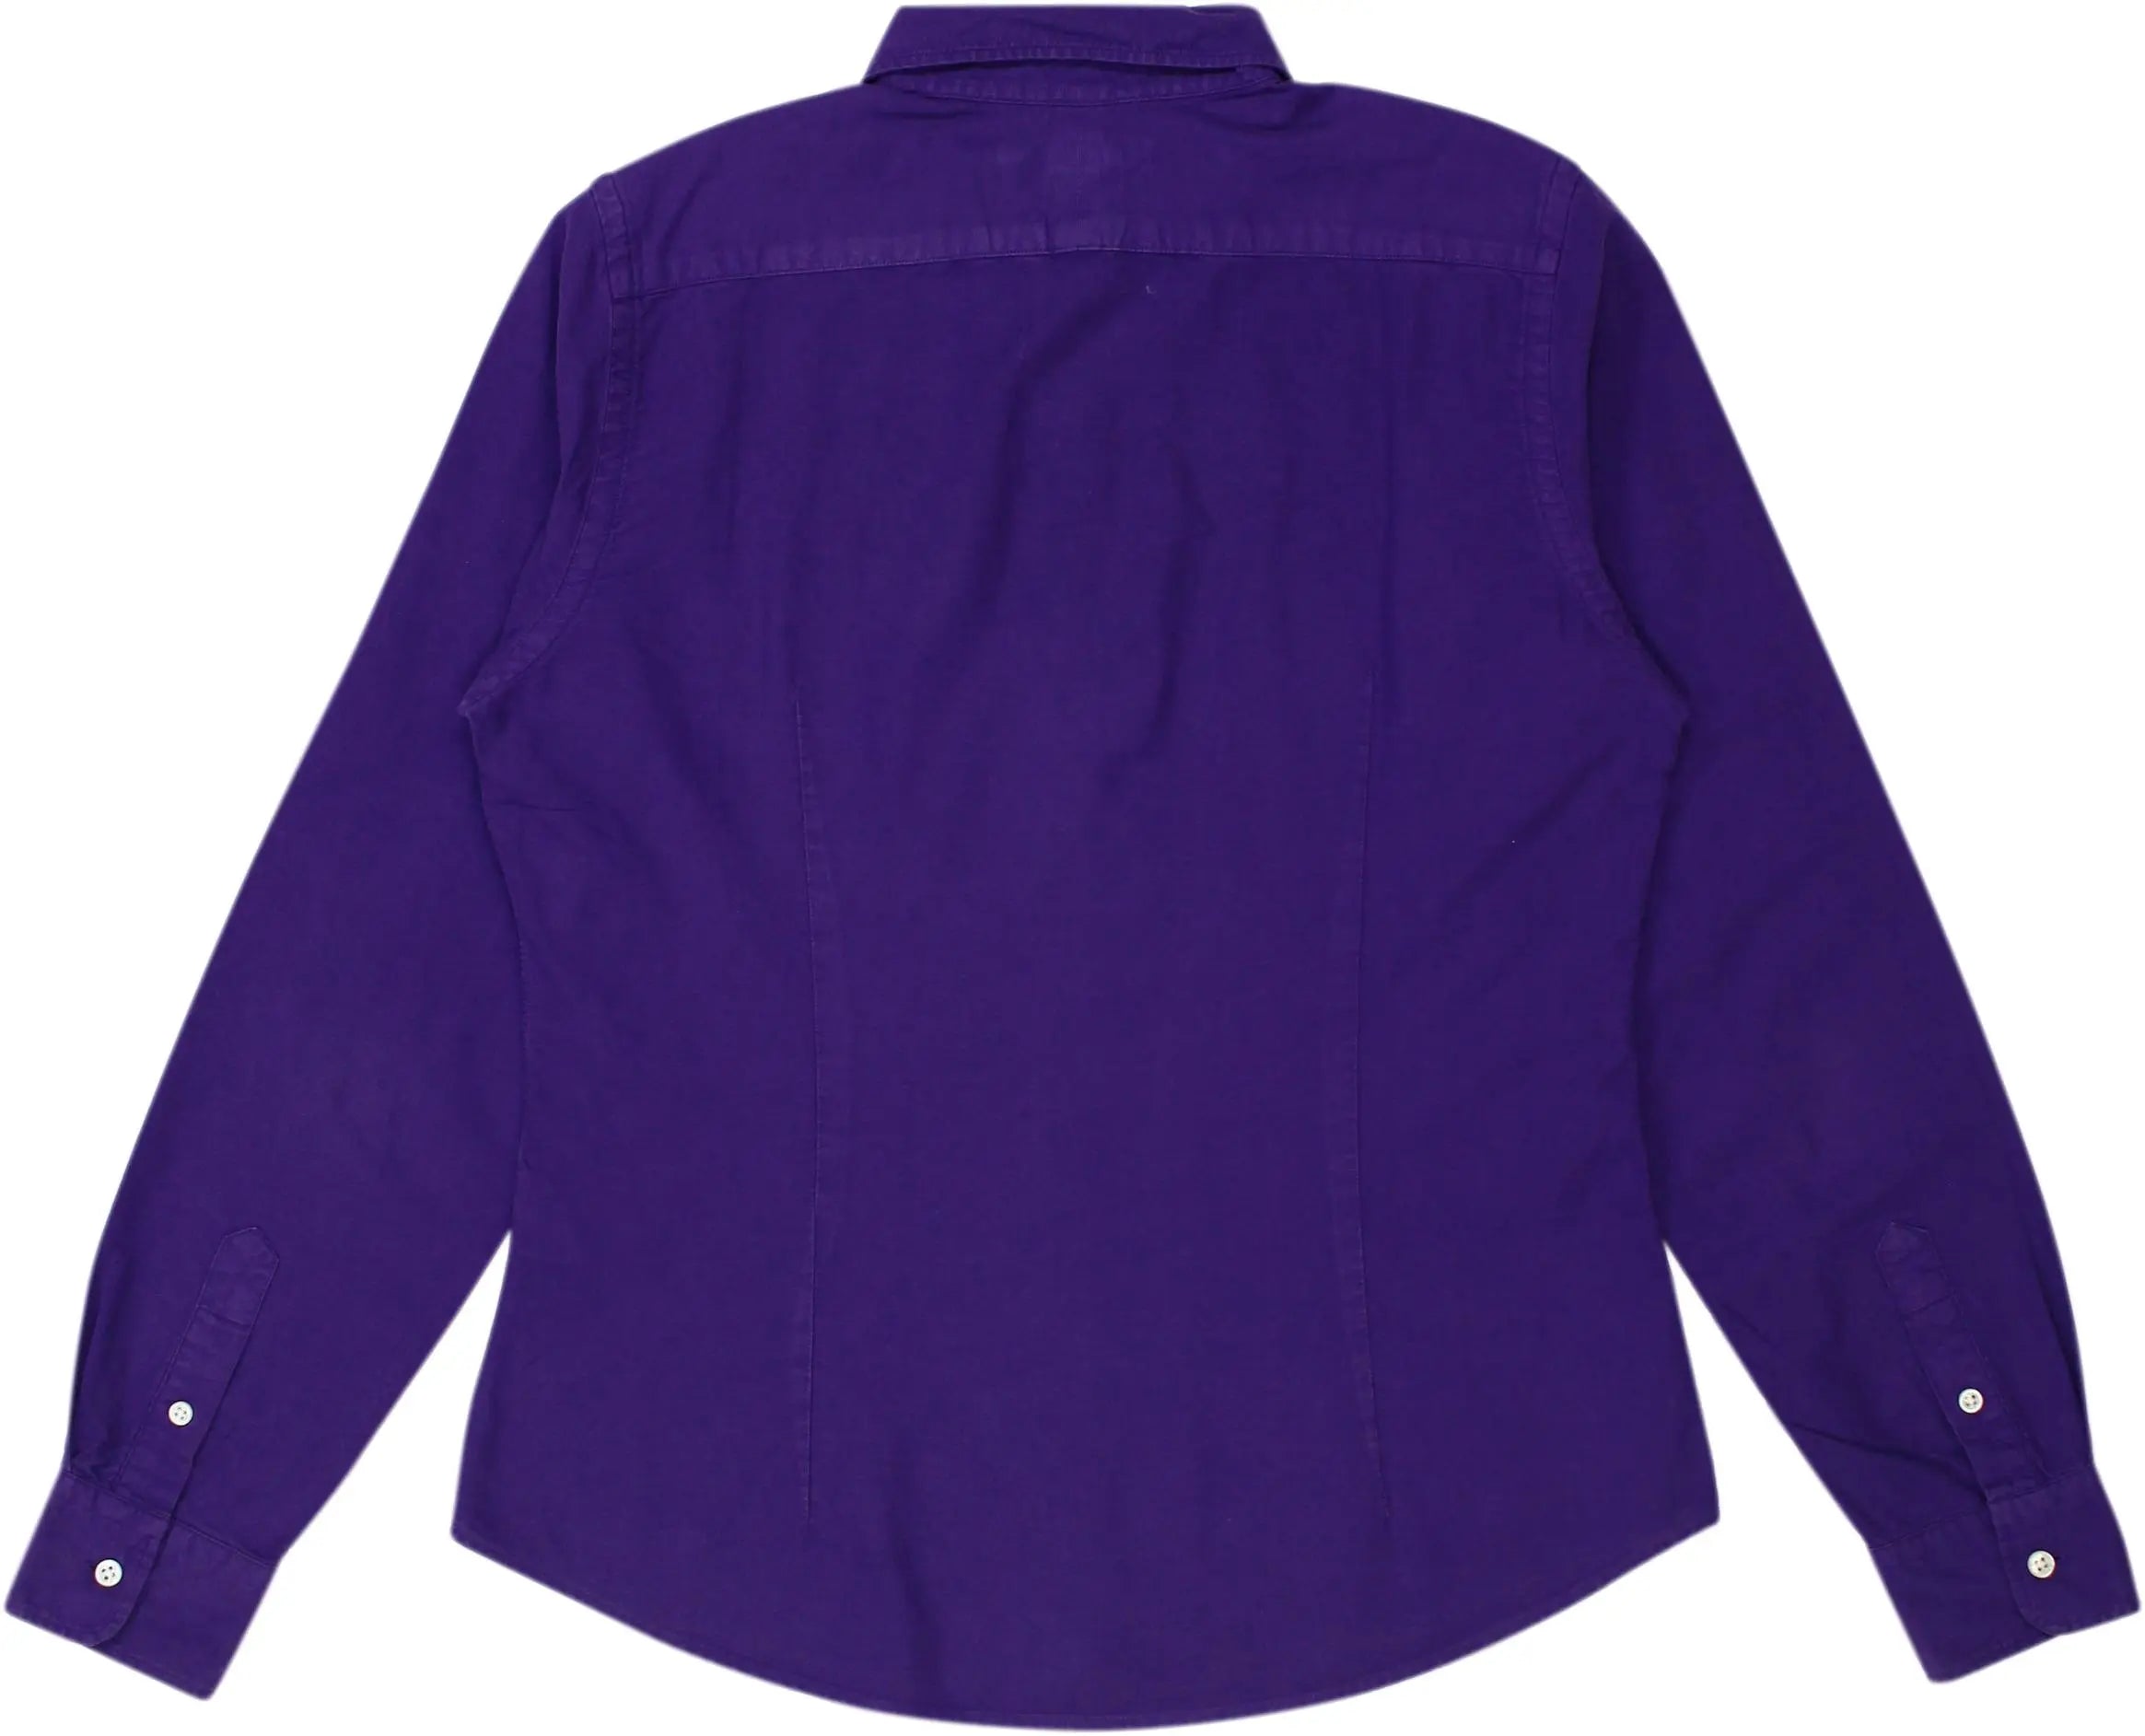 Ralph Lauren - Purple Long Sleeve Shirt by Ralph Lauren- ThriftTale.com - Vintage and second handclothing